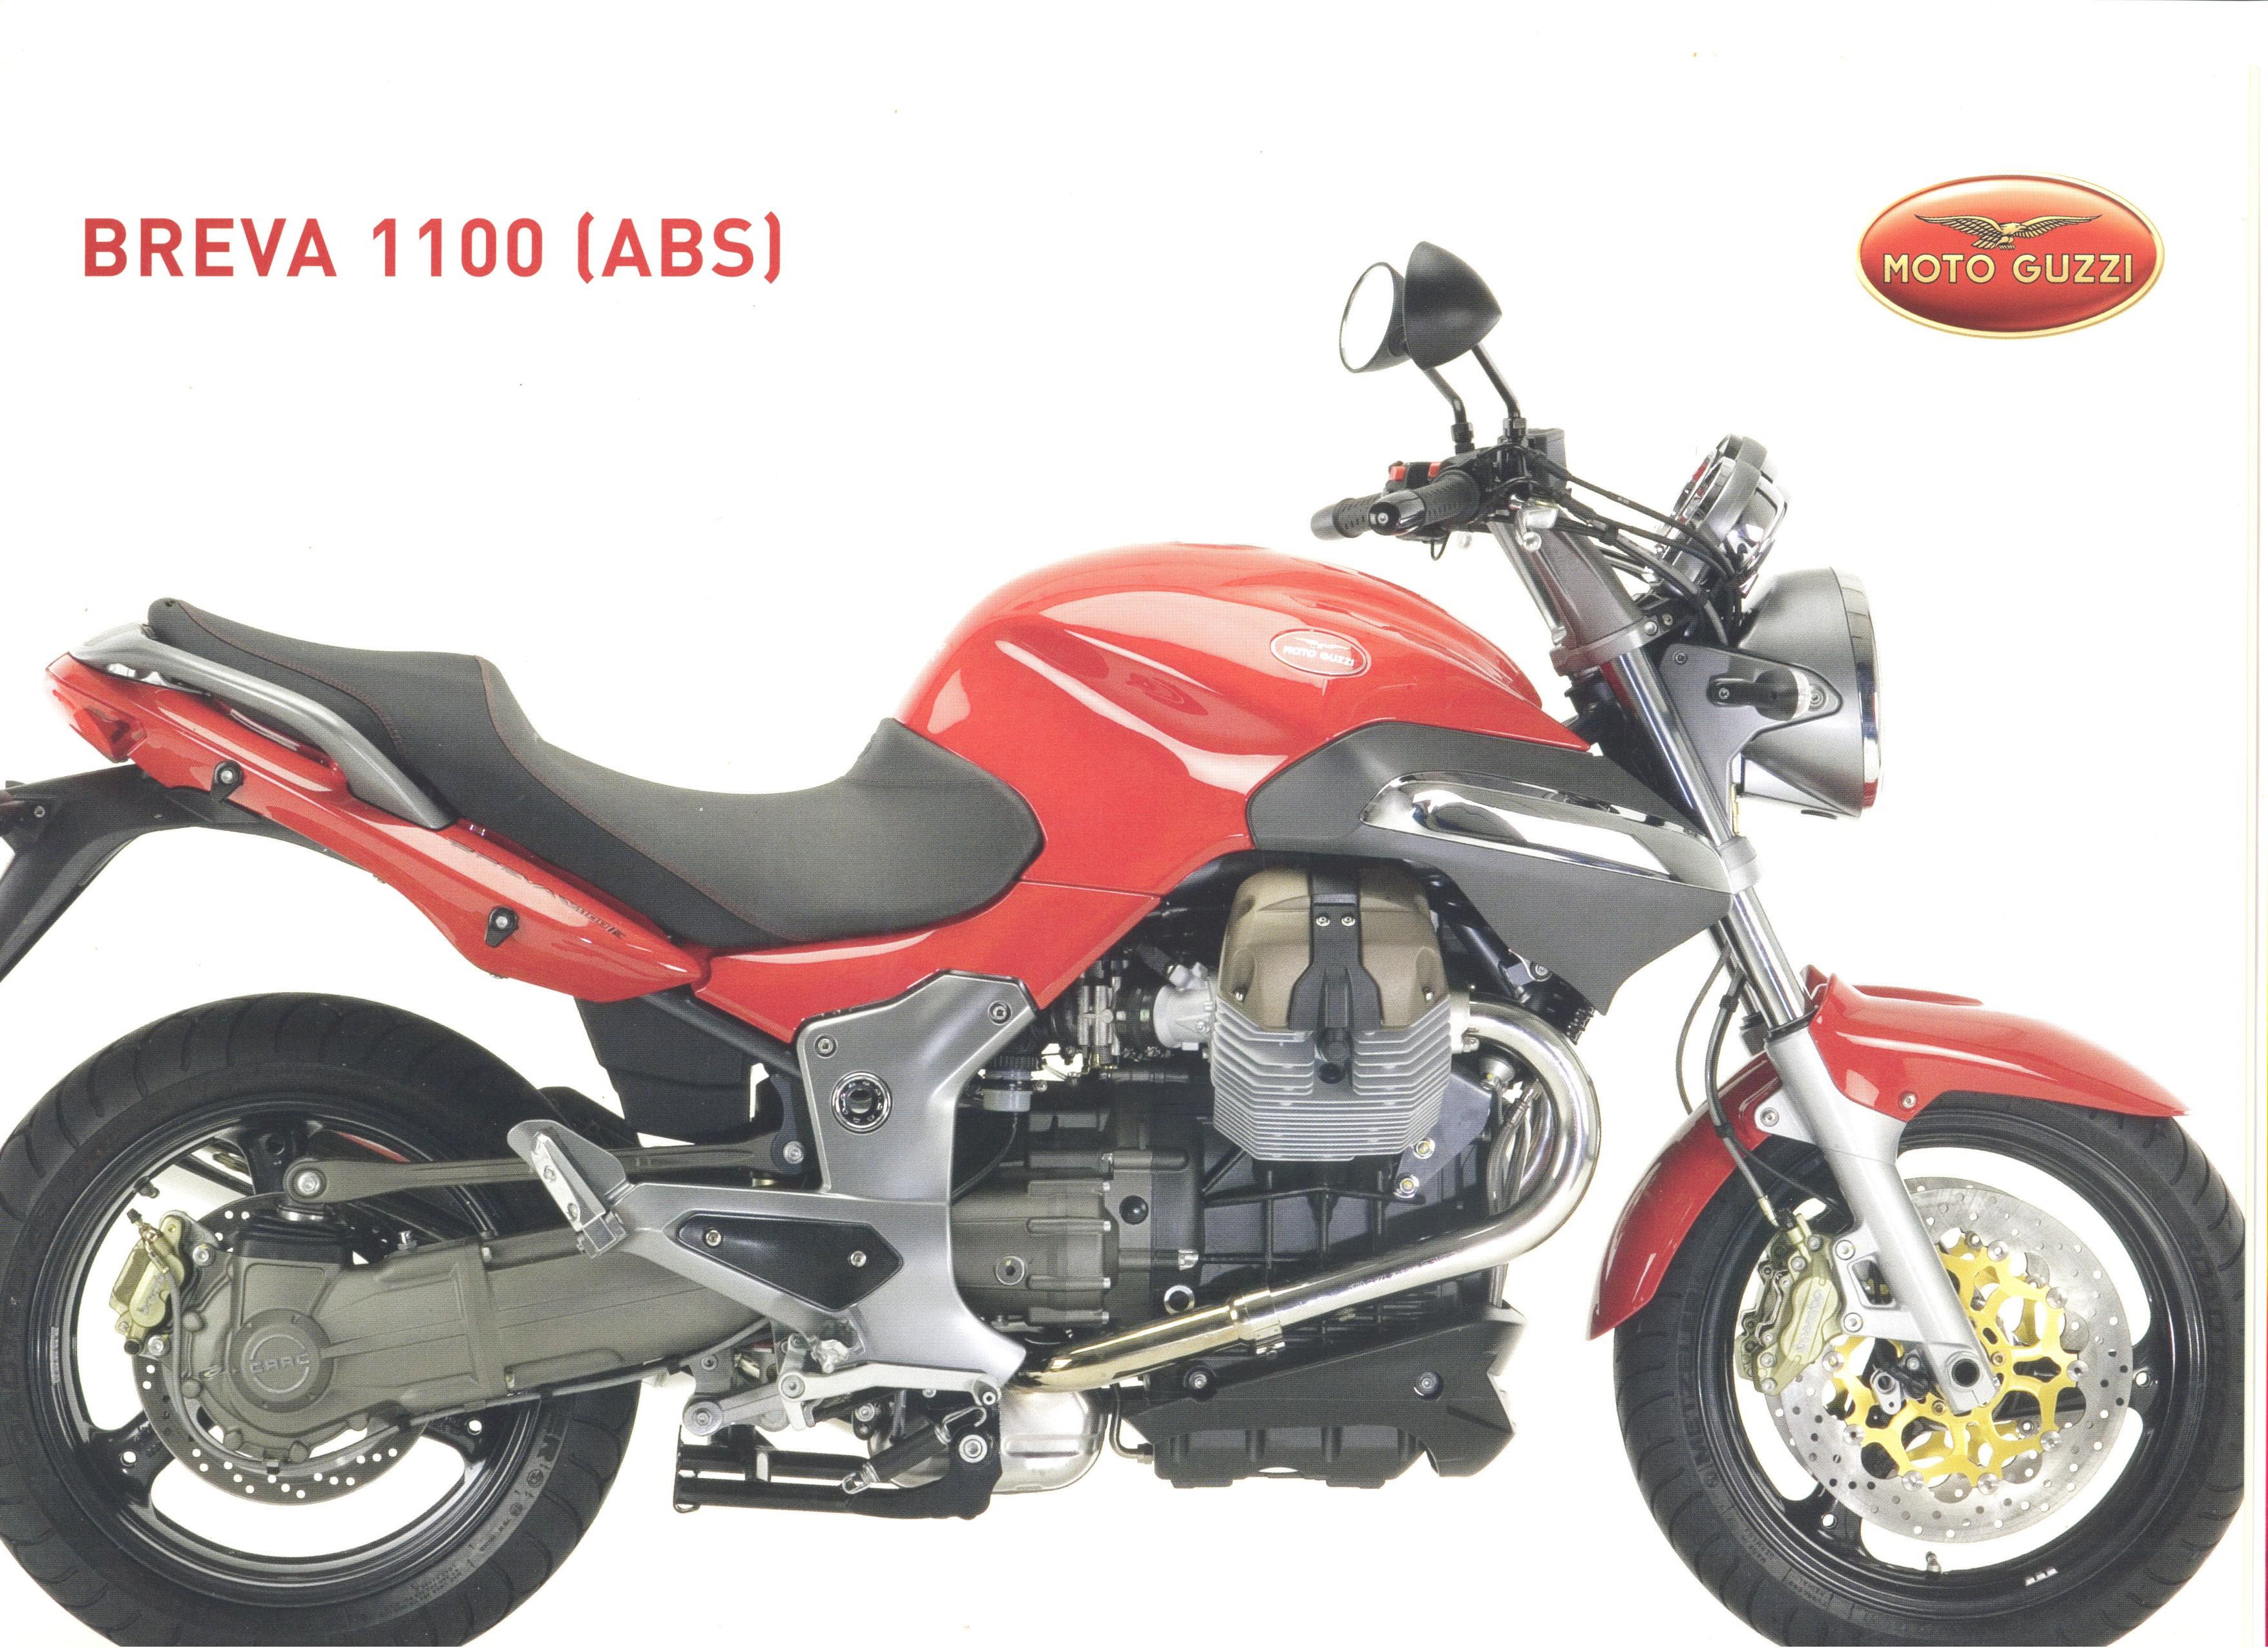 Moto Guzzi factory brochure: Breva 1100 ABS